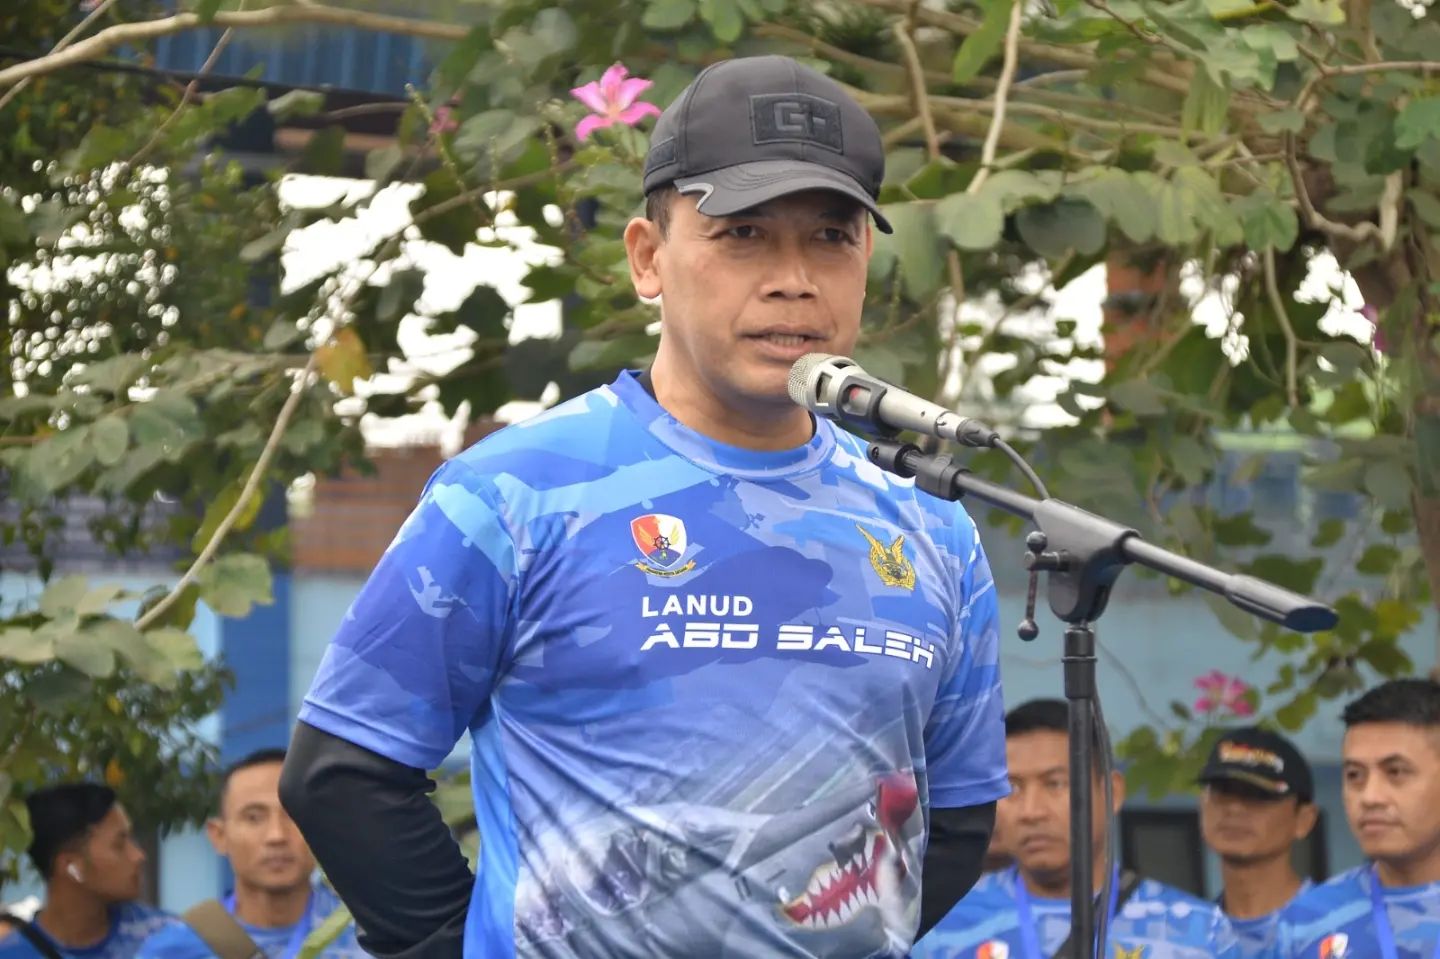 Komandan Lanud Abd Saleh Marsma TNI Fairlyanto, S.T., M.A.P